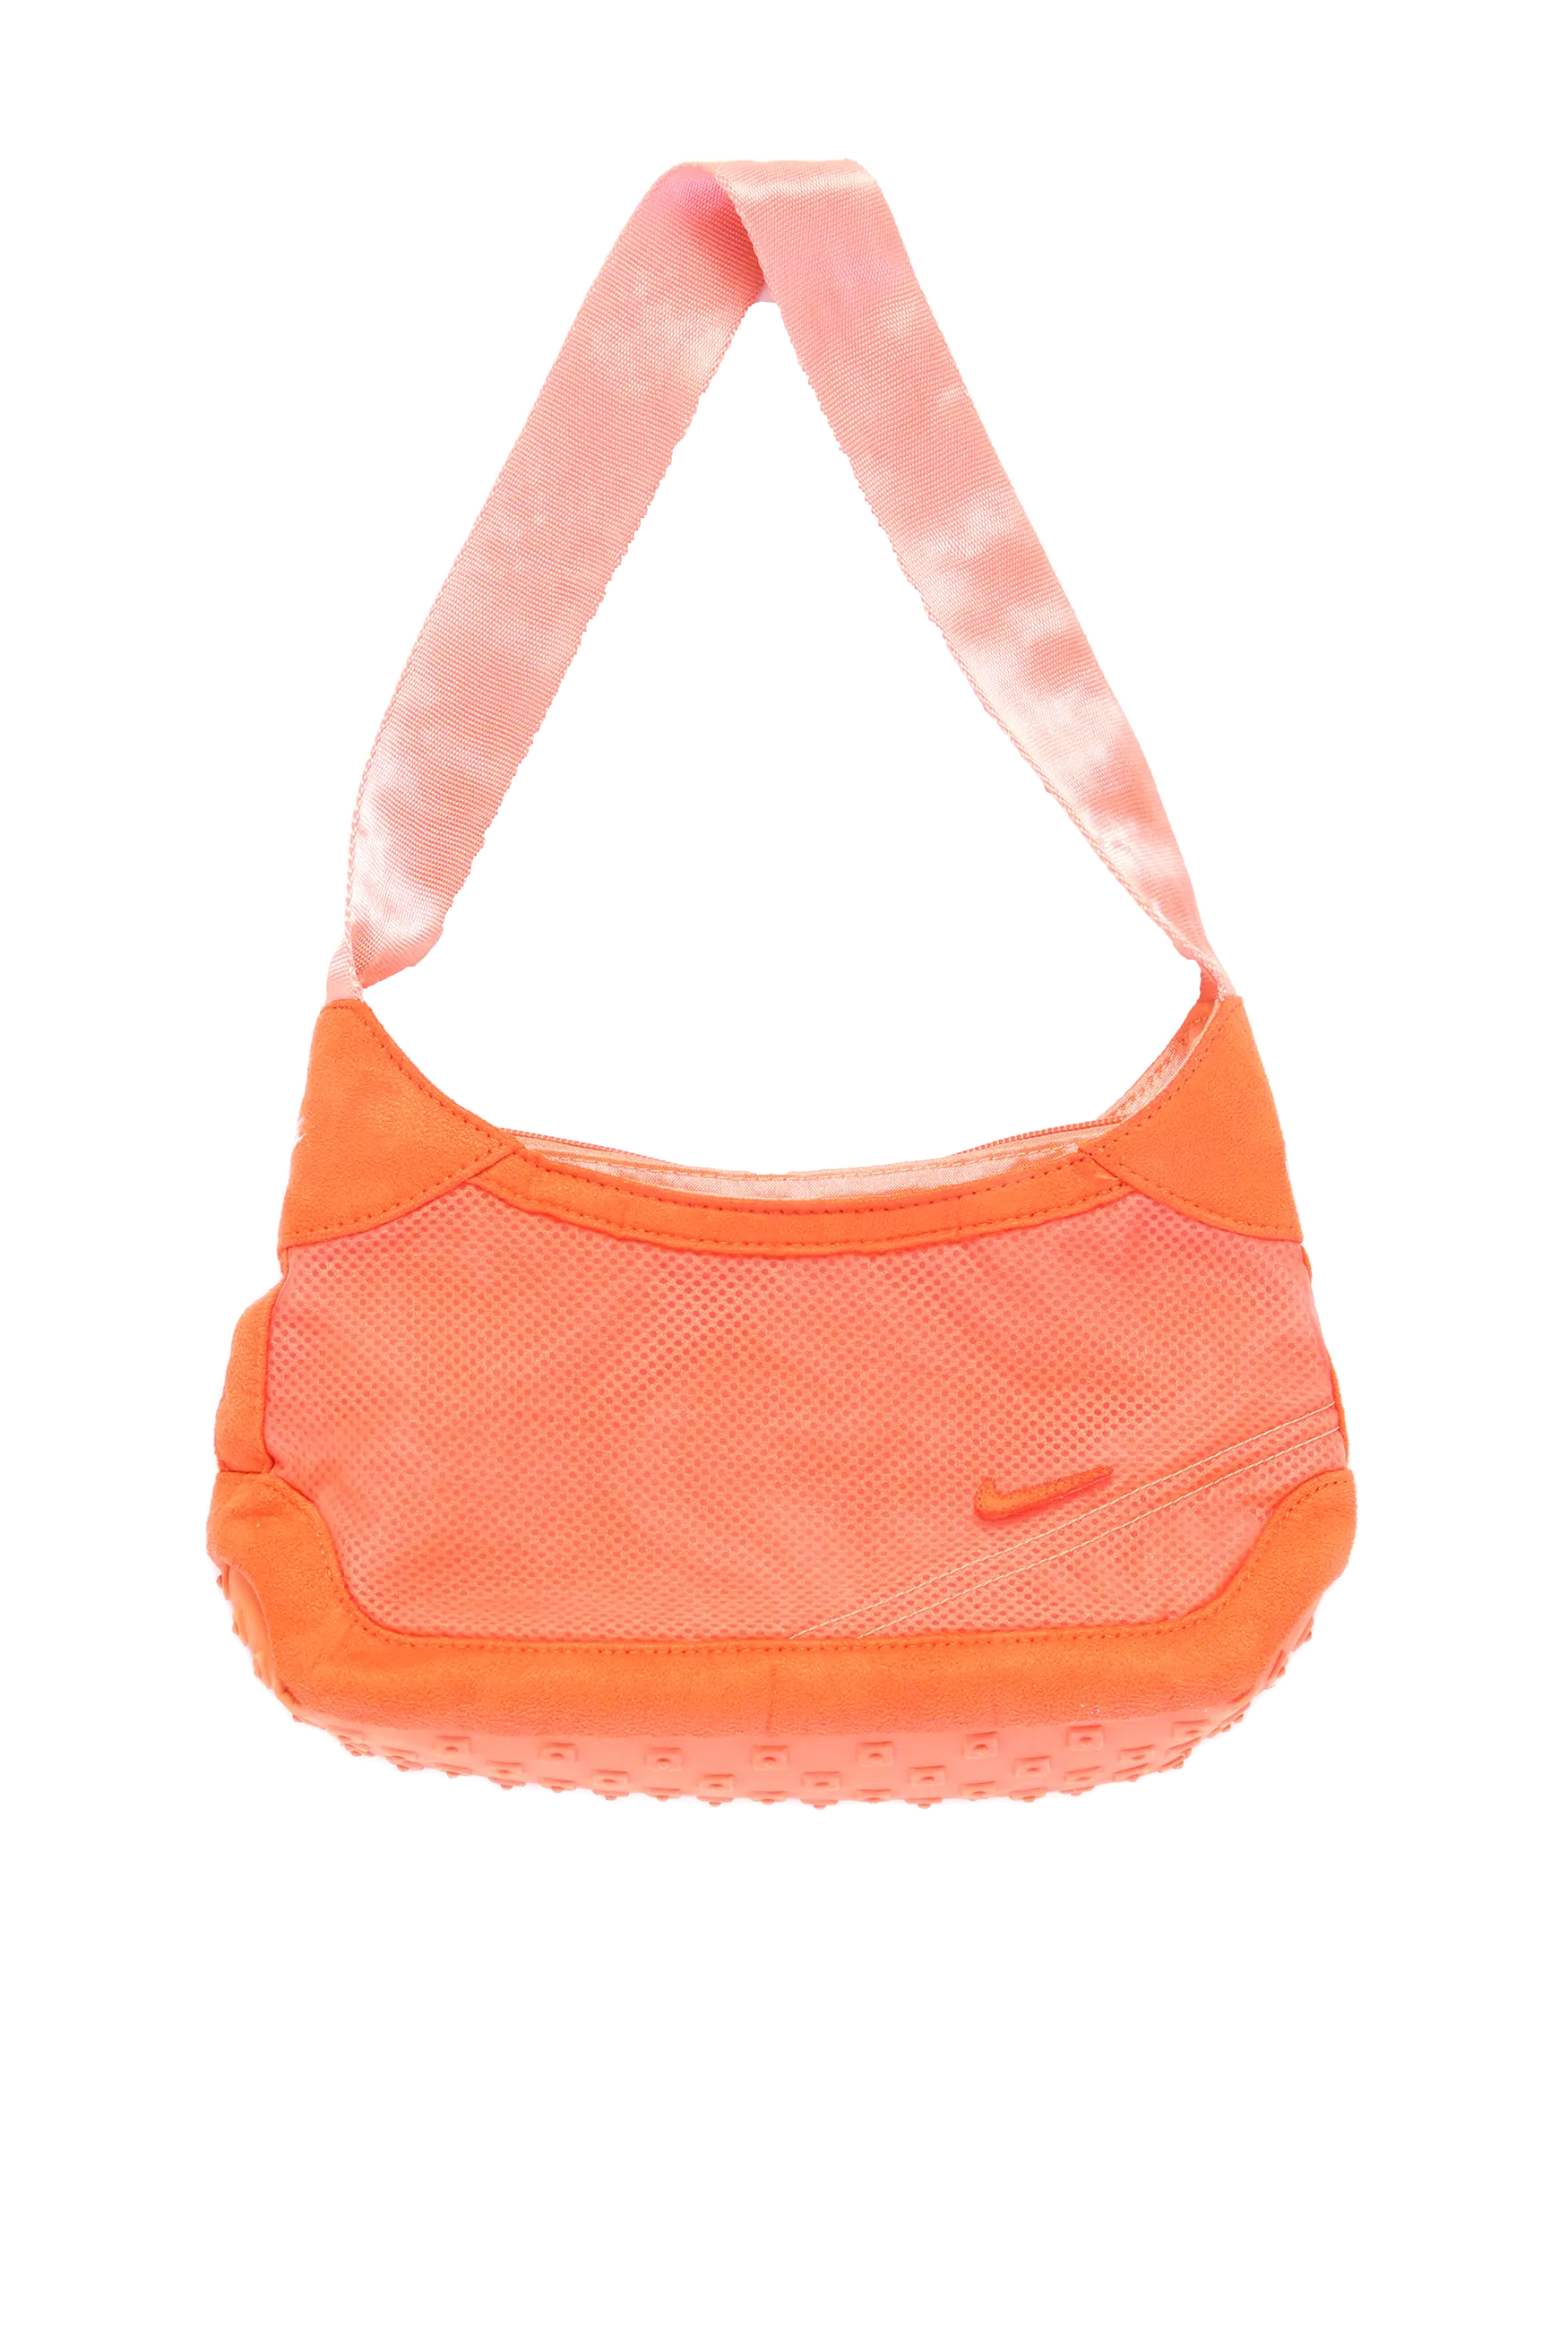 Nike 2K Peach Shoulder Bag